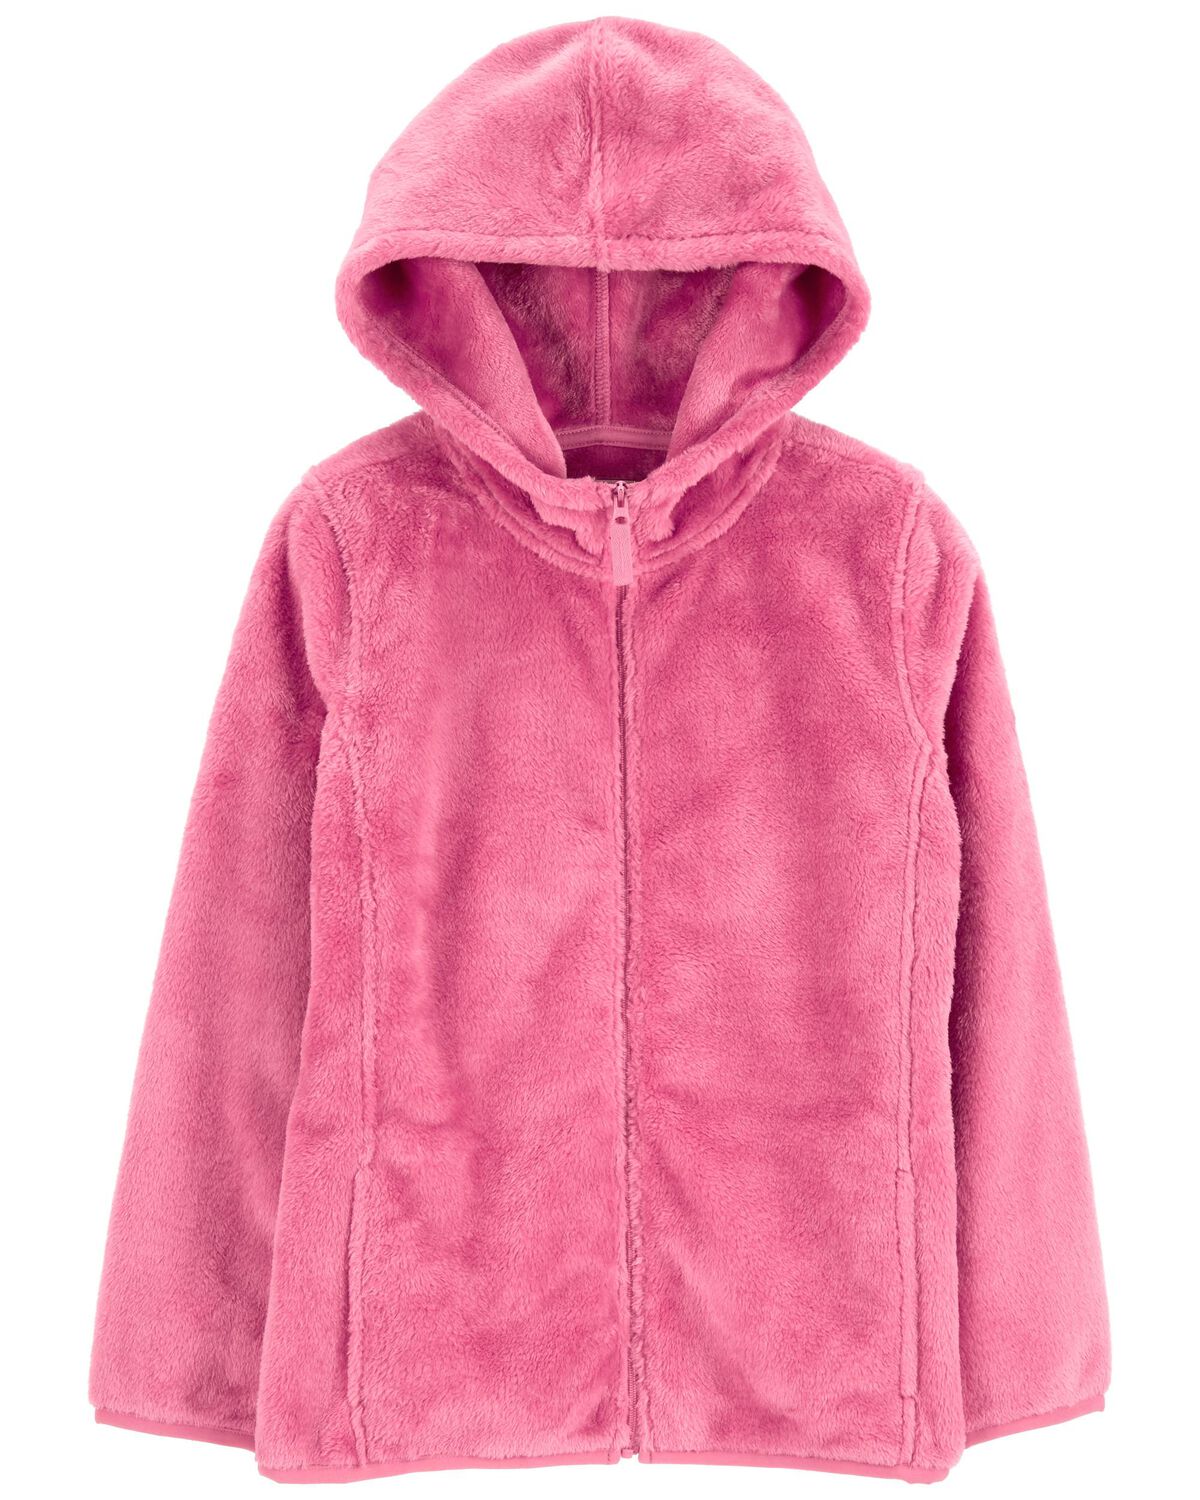 Pink Kid Hooded Zip-Up Sherpa Jacket | carters.com